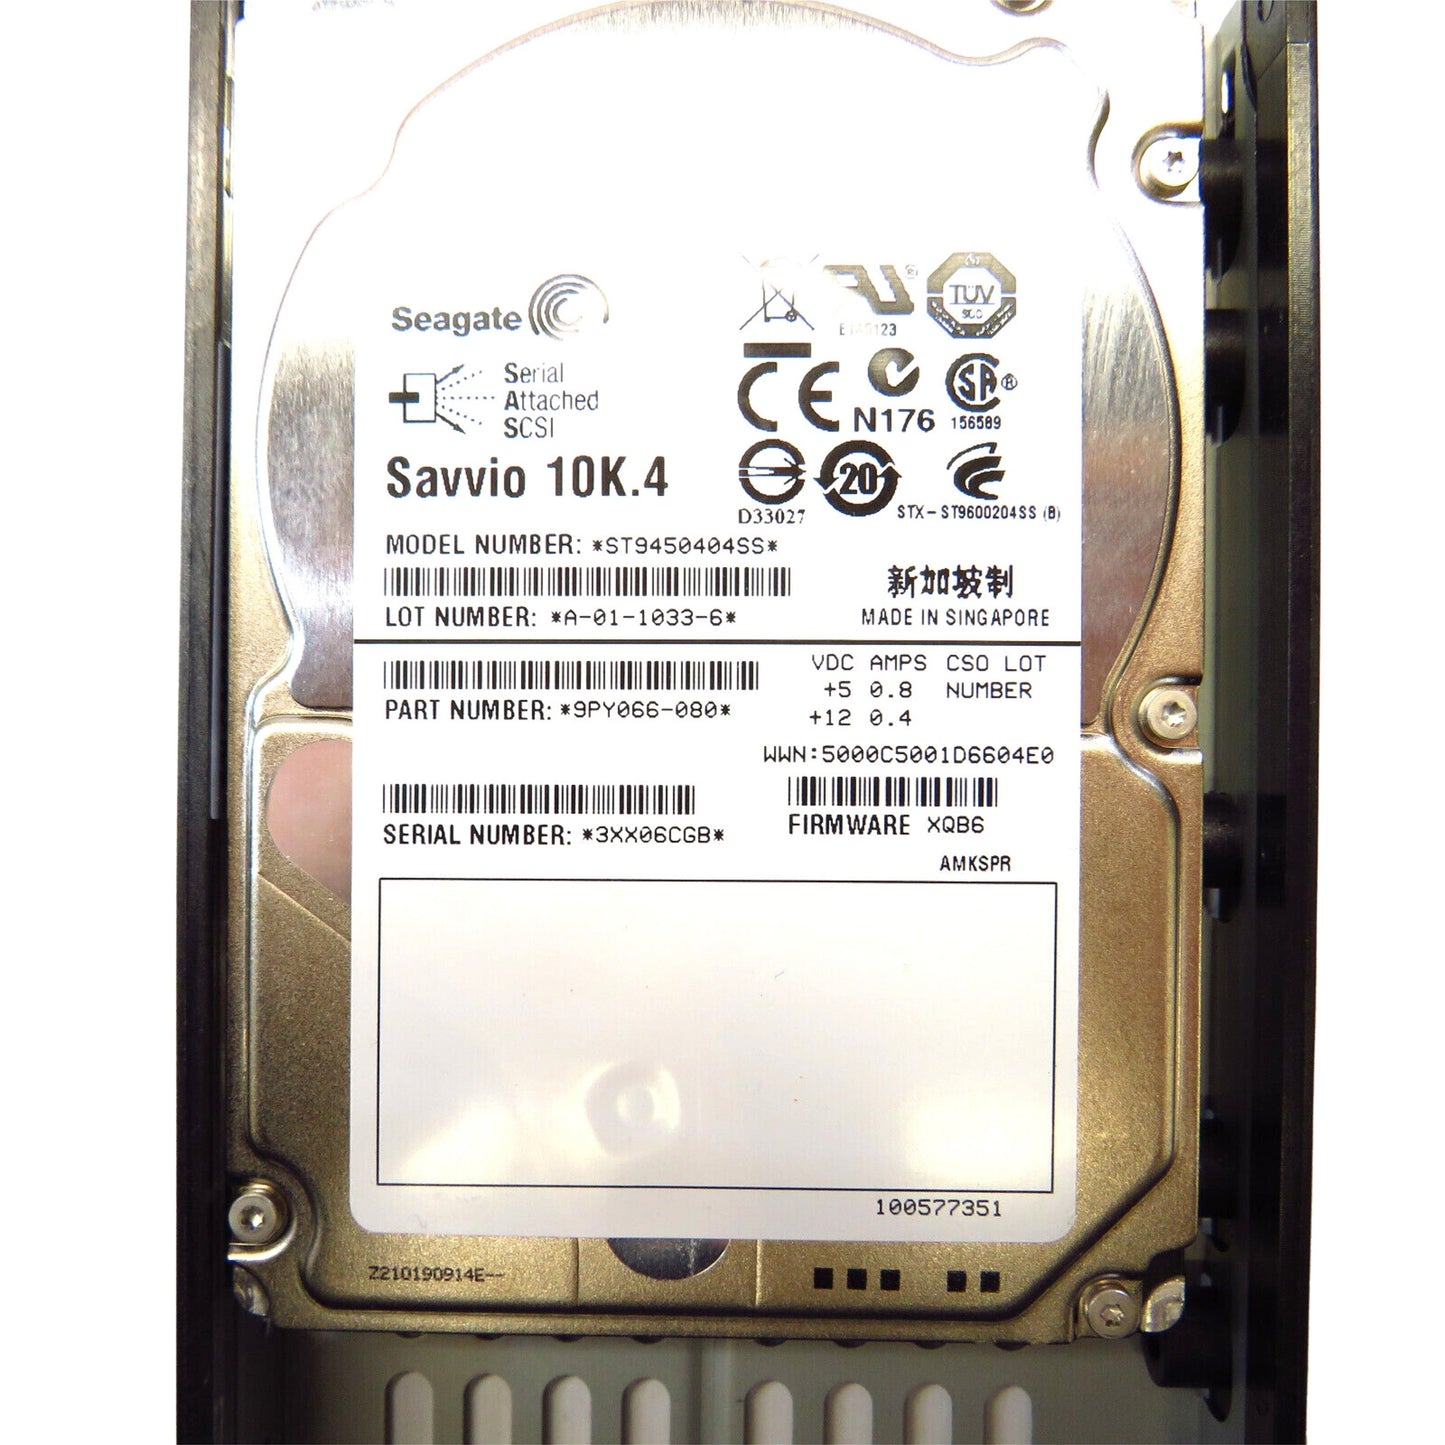 Dell 0949448-03 2.5" 450GB 10000RPM SAS 6Gb/s Hard Disk Drive (HDD), Silver (Refurbished)